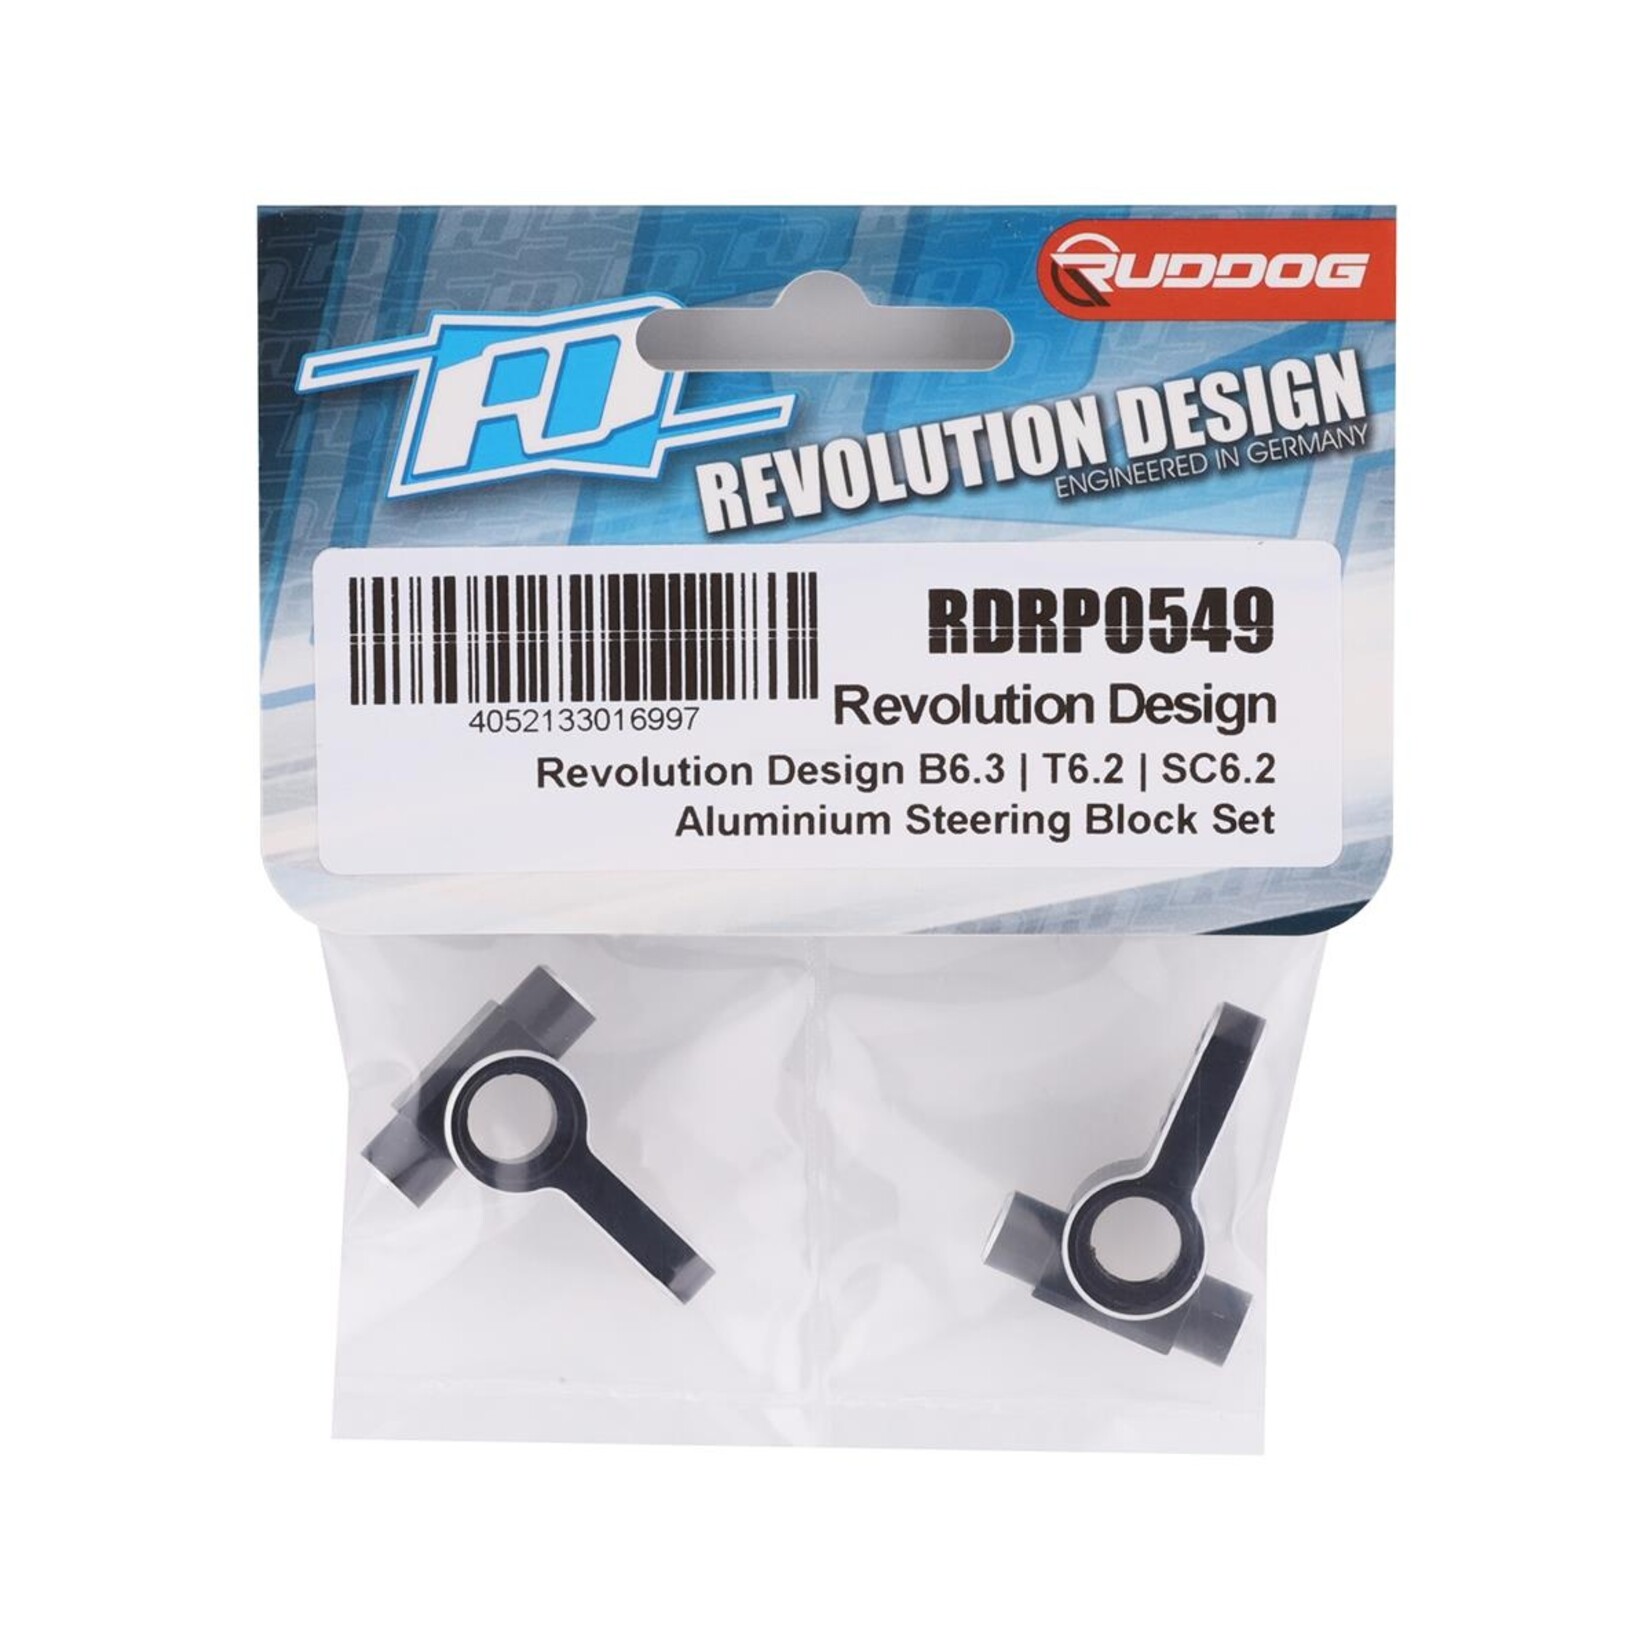 Revolution Design Revolution Design B6.3/T6.2/SC6.2 Aluminum Steering Block Set #RDRP0549